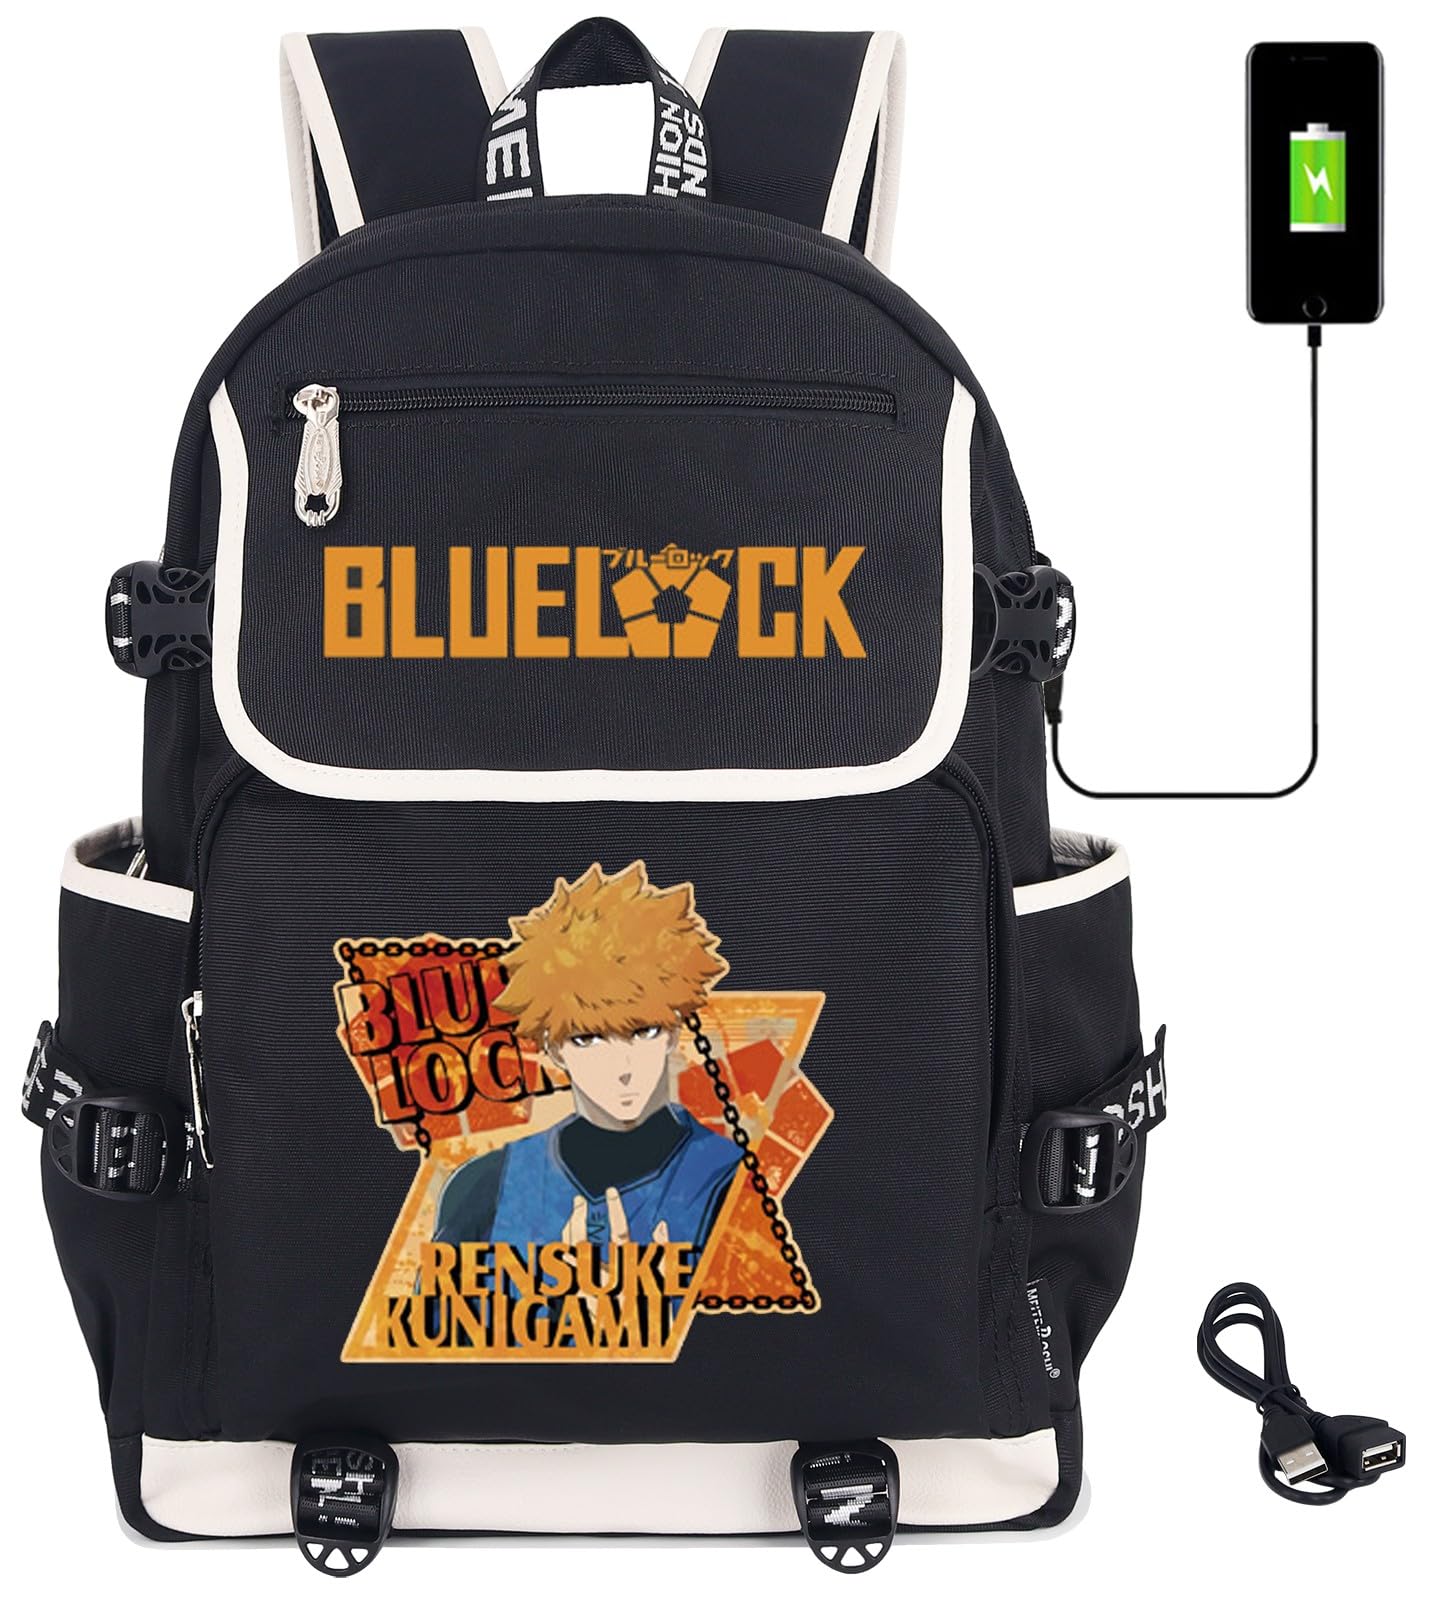 Roffatide Anime Blue Lock Laptop Backpack with USB Charging Port Yoichi Isagi Rucksack with Printed Wanima Backpack for Men Women Seishiro Nagi Graphic Travel Yor Backpack D